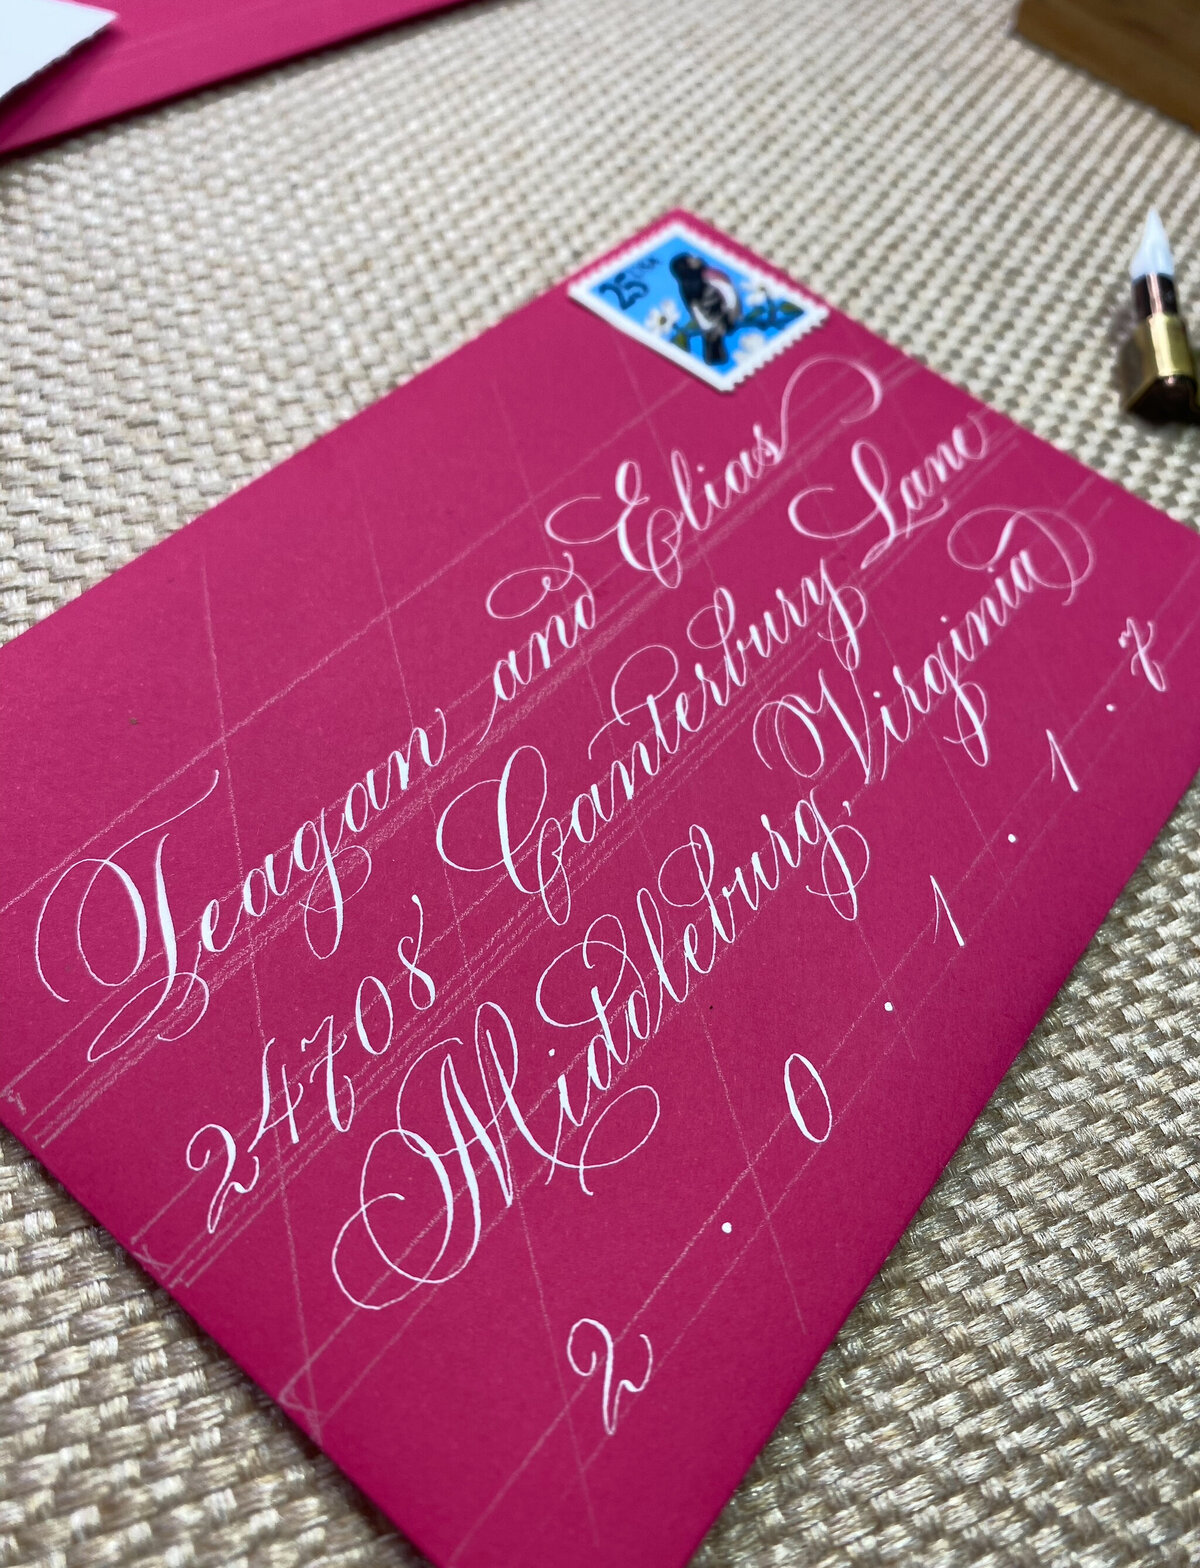 Elegant custom calligraphy on a pink envelope